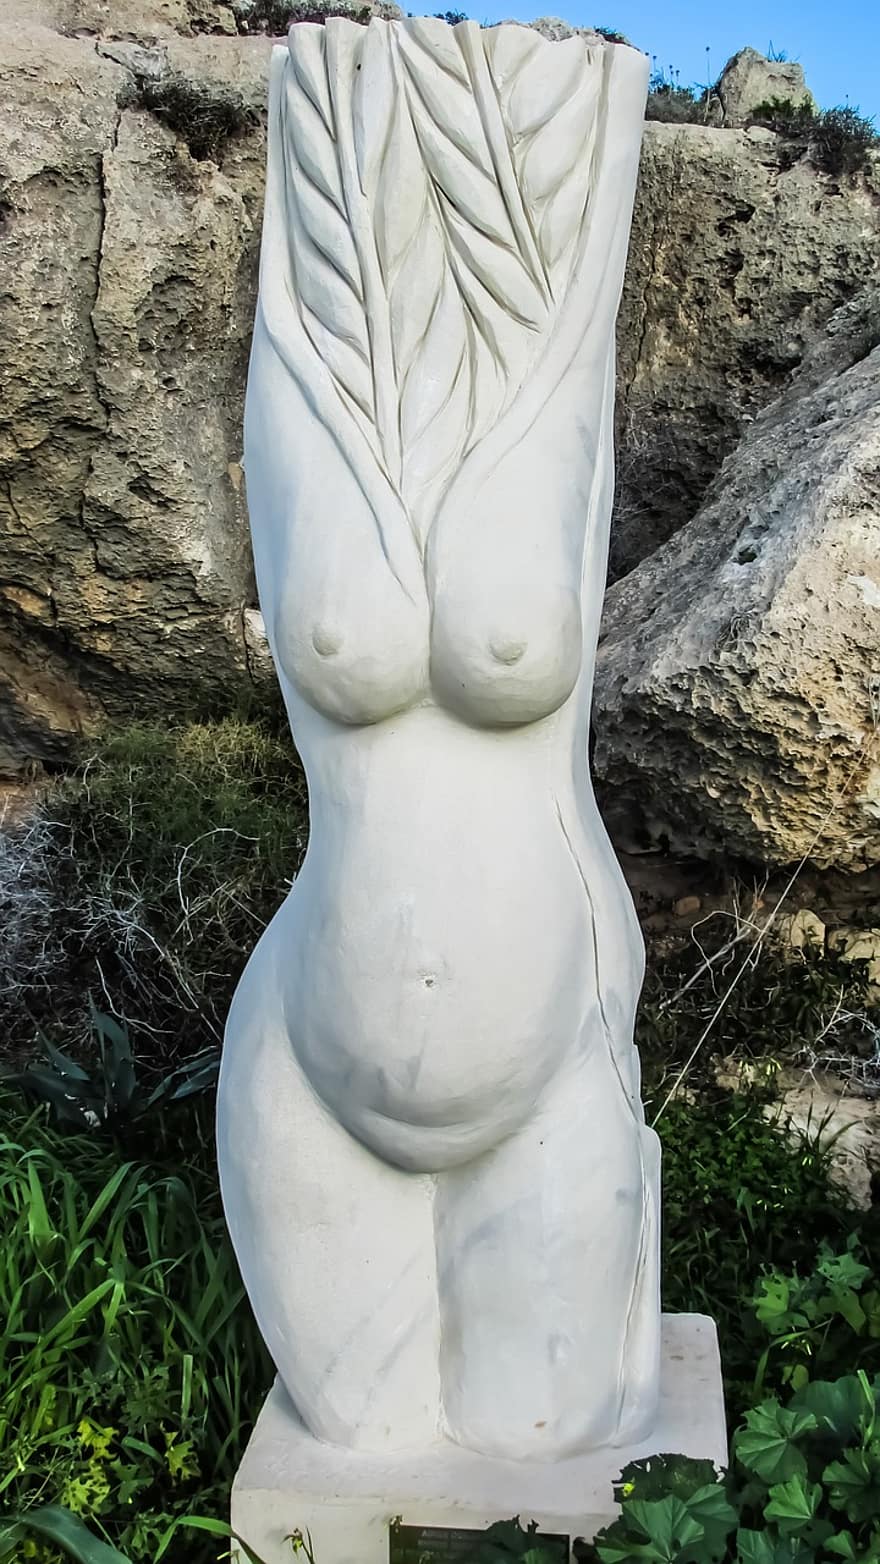 Kıbrıs, ayia napa, heykel parkı, doğurganlık